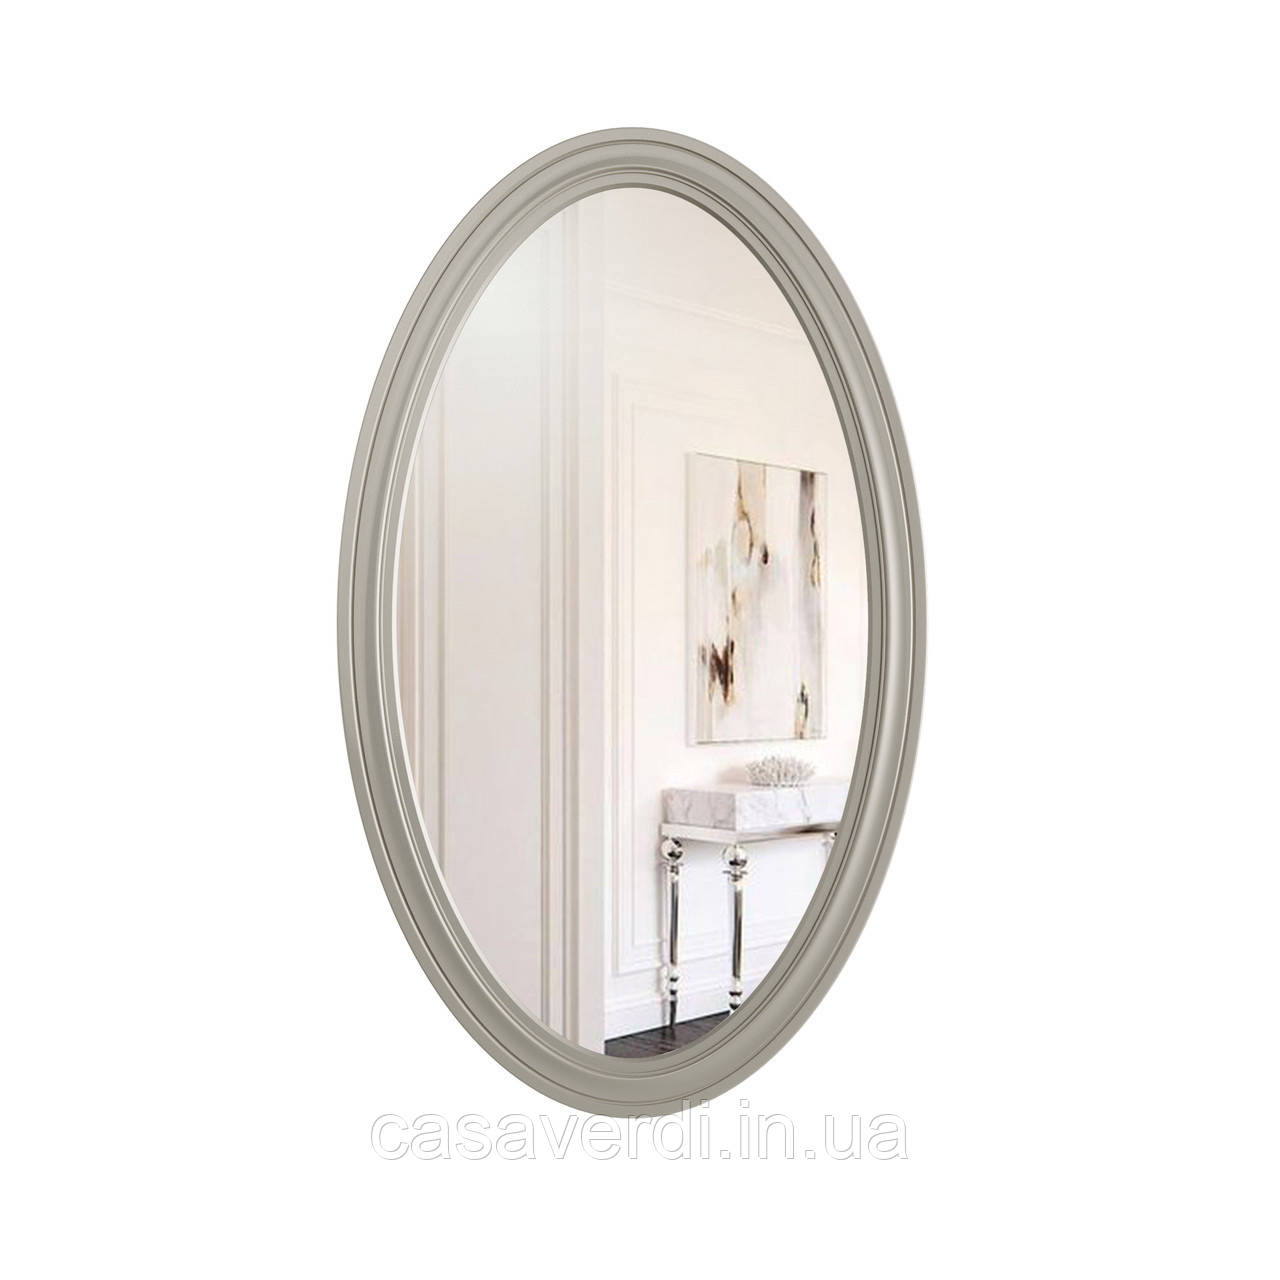 Дзеркало овальне настінне Casa Verdi Ellipse срібло 100 см х 60 см. Рама МДФ